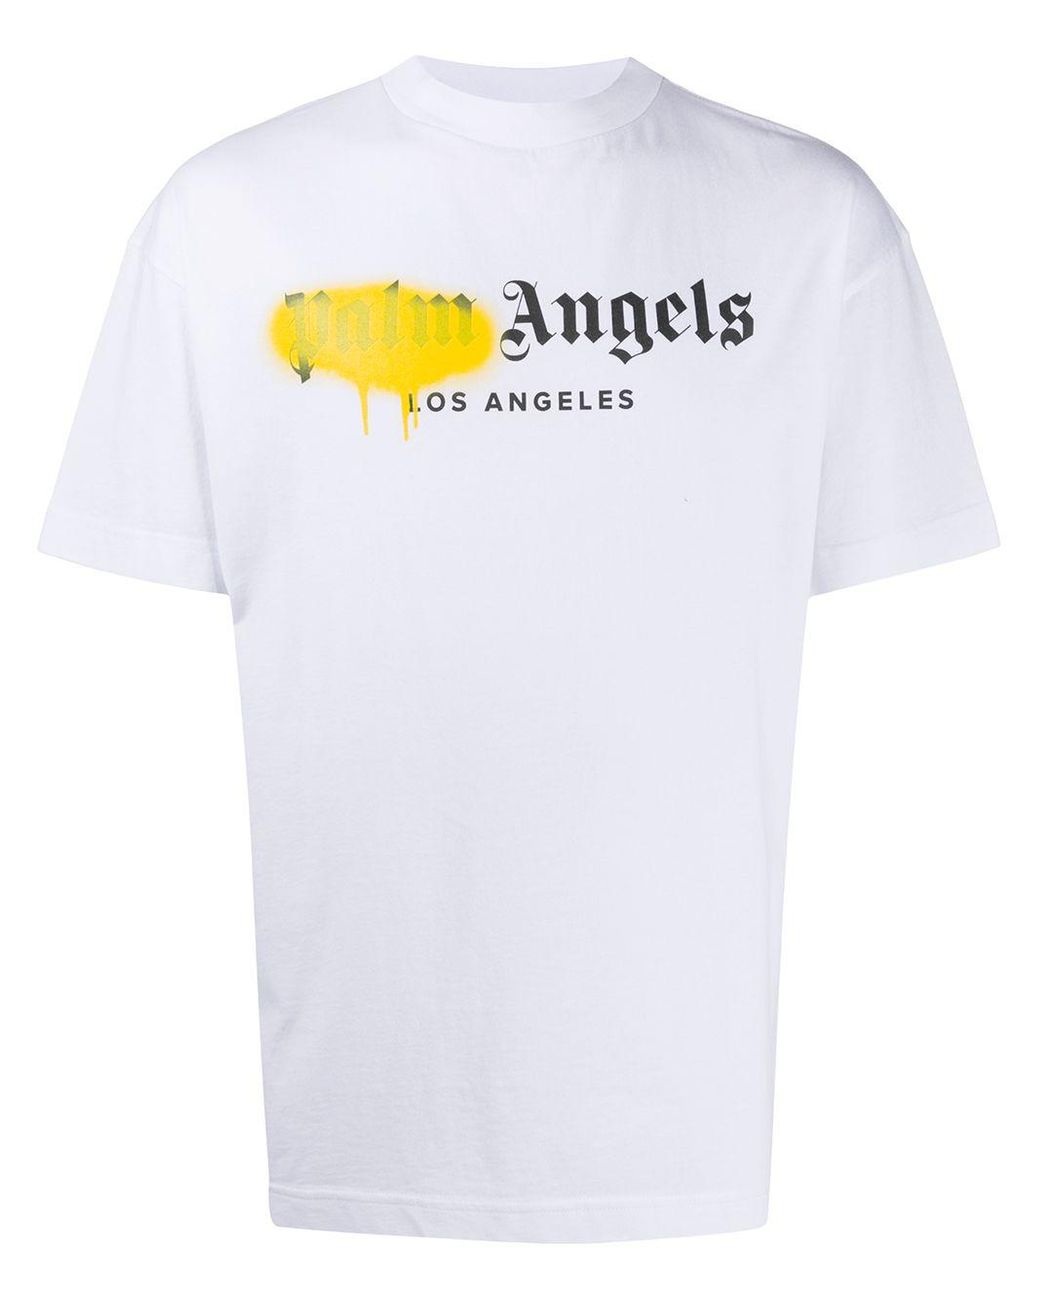 Palm Angels Cotton La Spray Paint-effect T-shirt in White for Men - Lyst